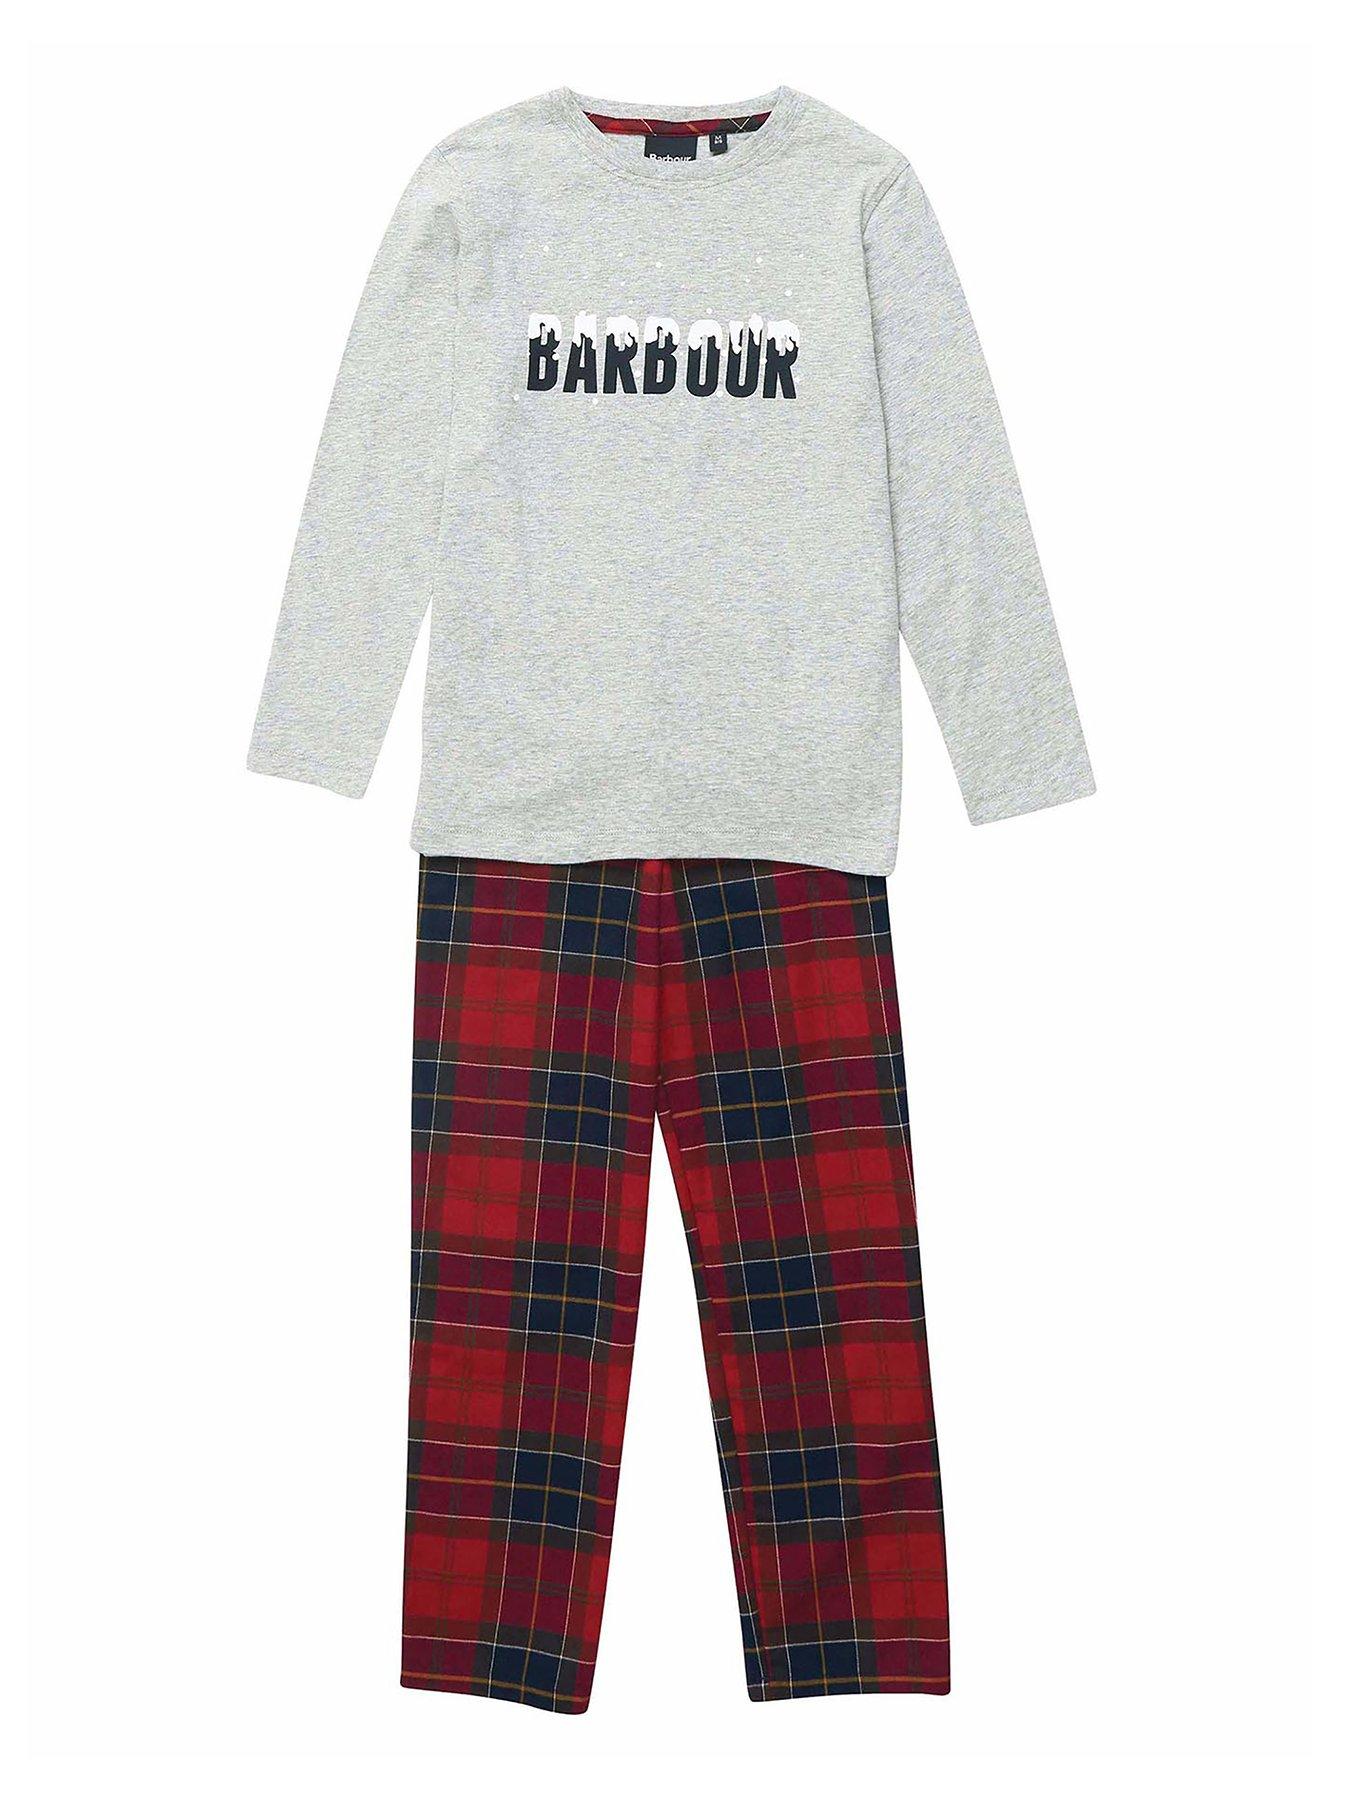  Boys Frank Check Pyjama Set - Red